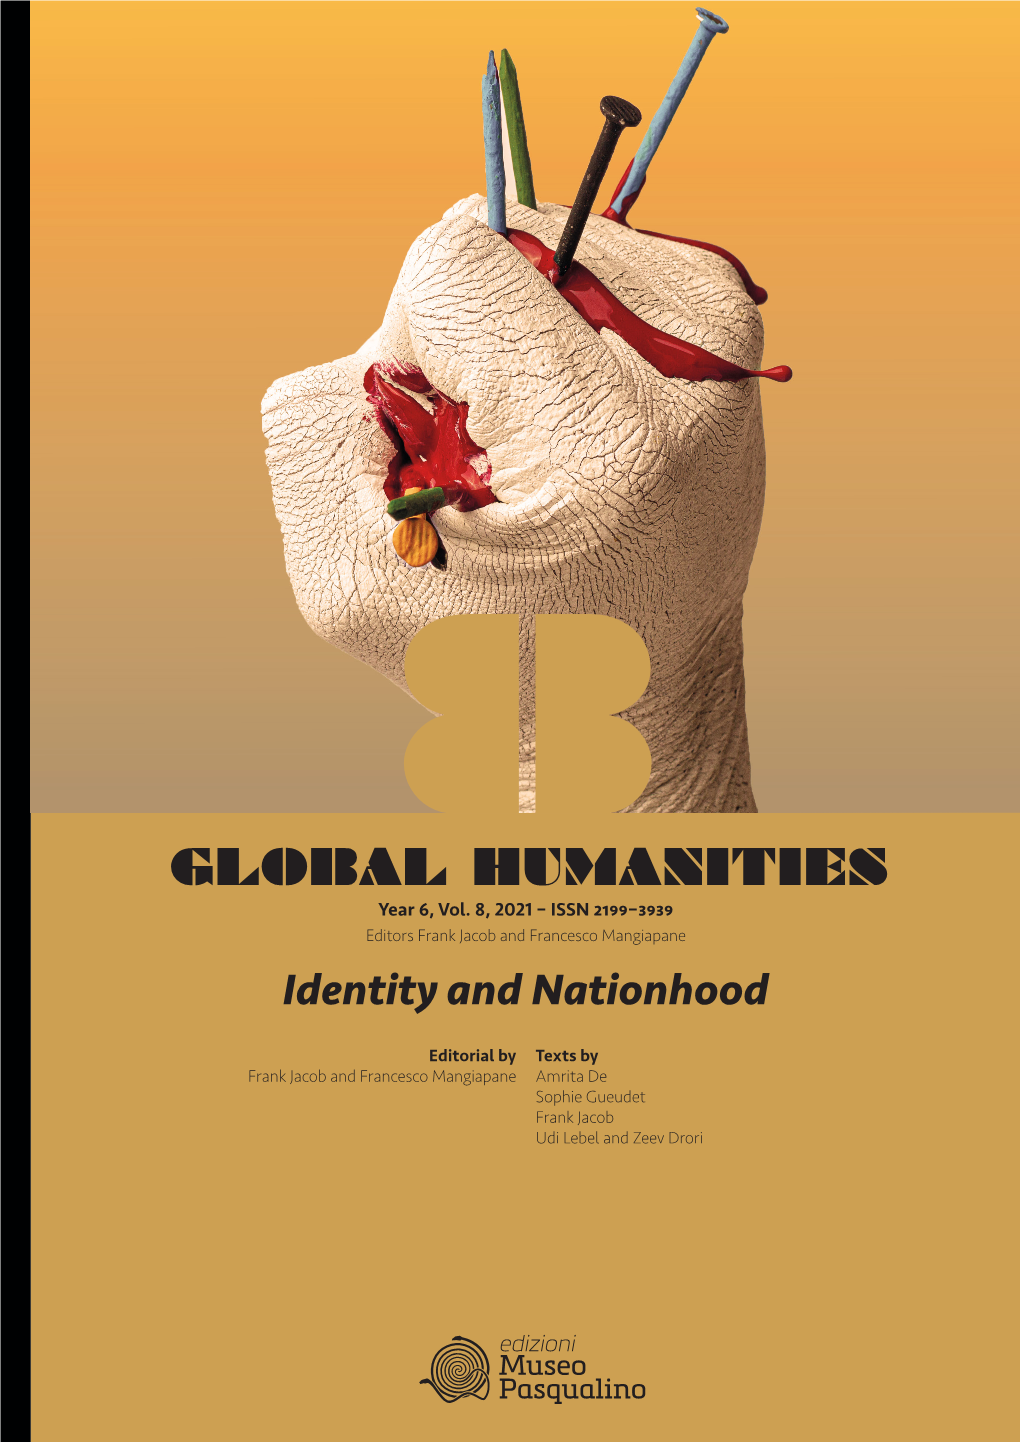 GLOBAL HUMANITIES Year 6, Vol